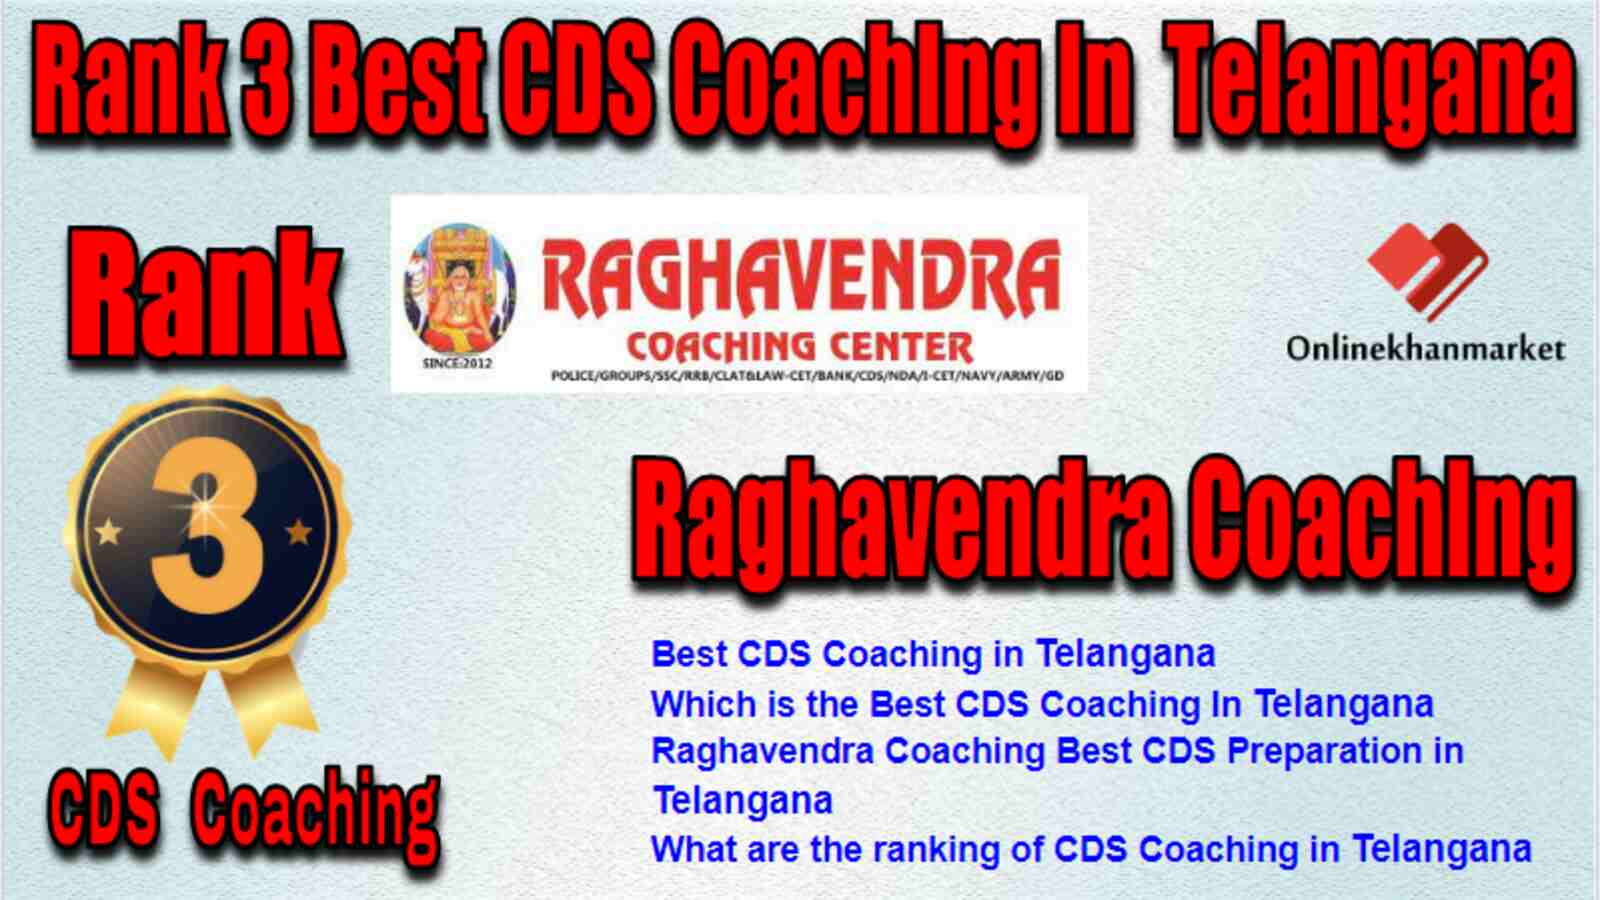 Rank 3 Best CDS Coaching in Telangana